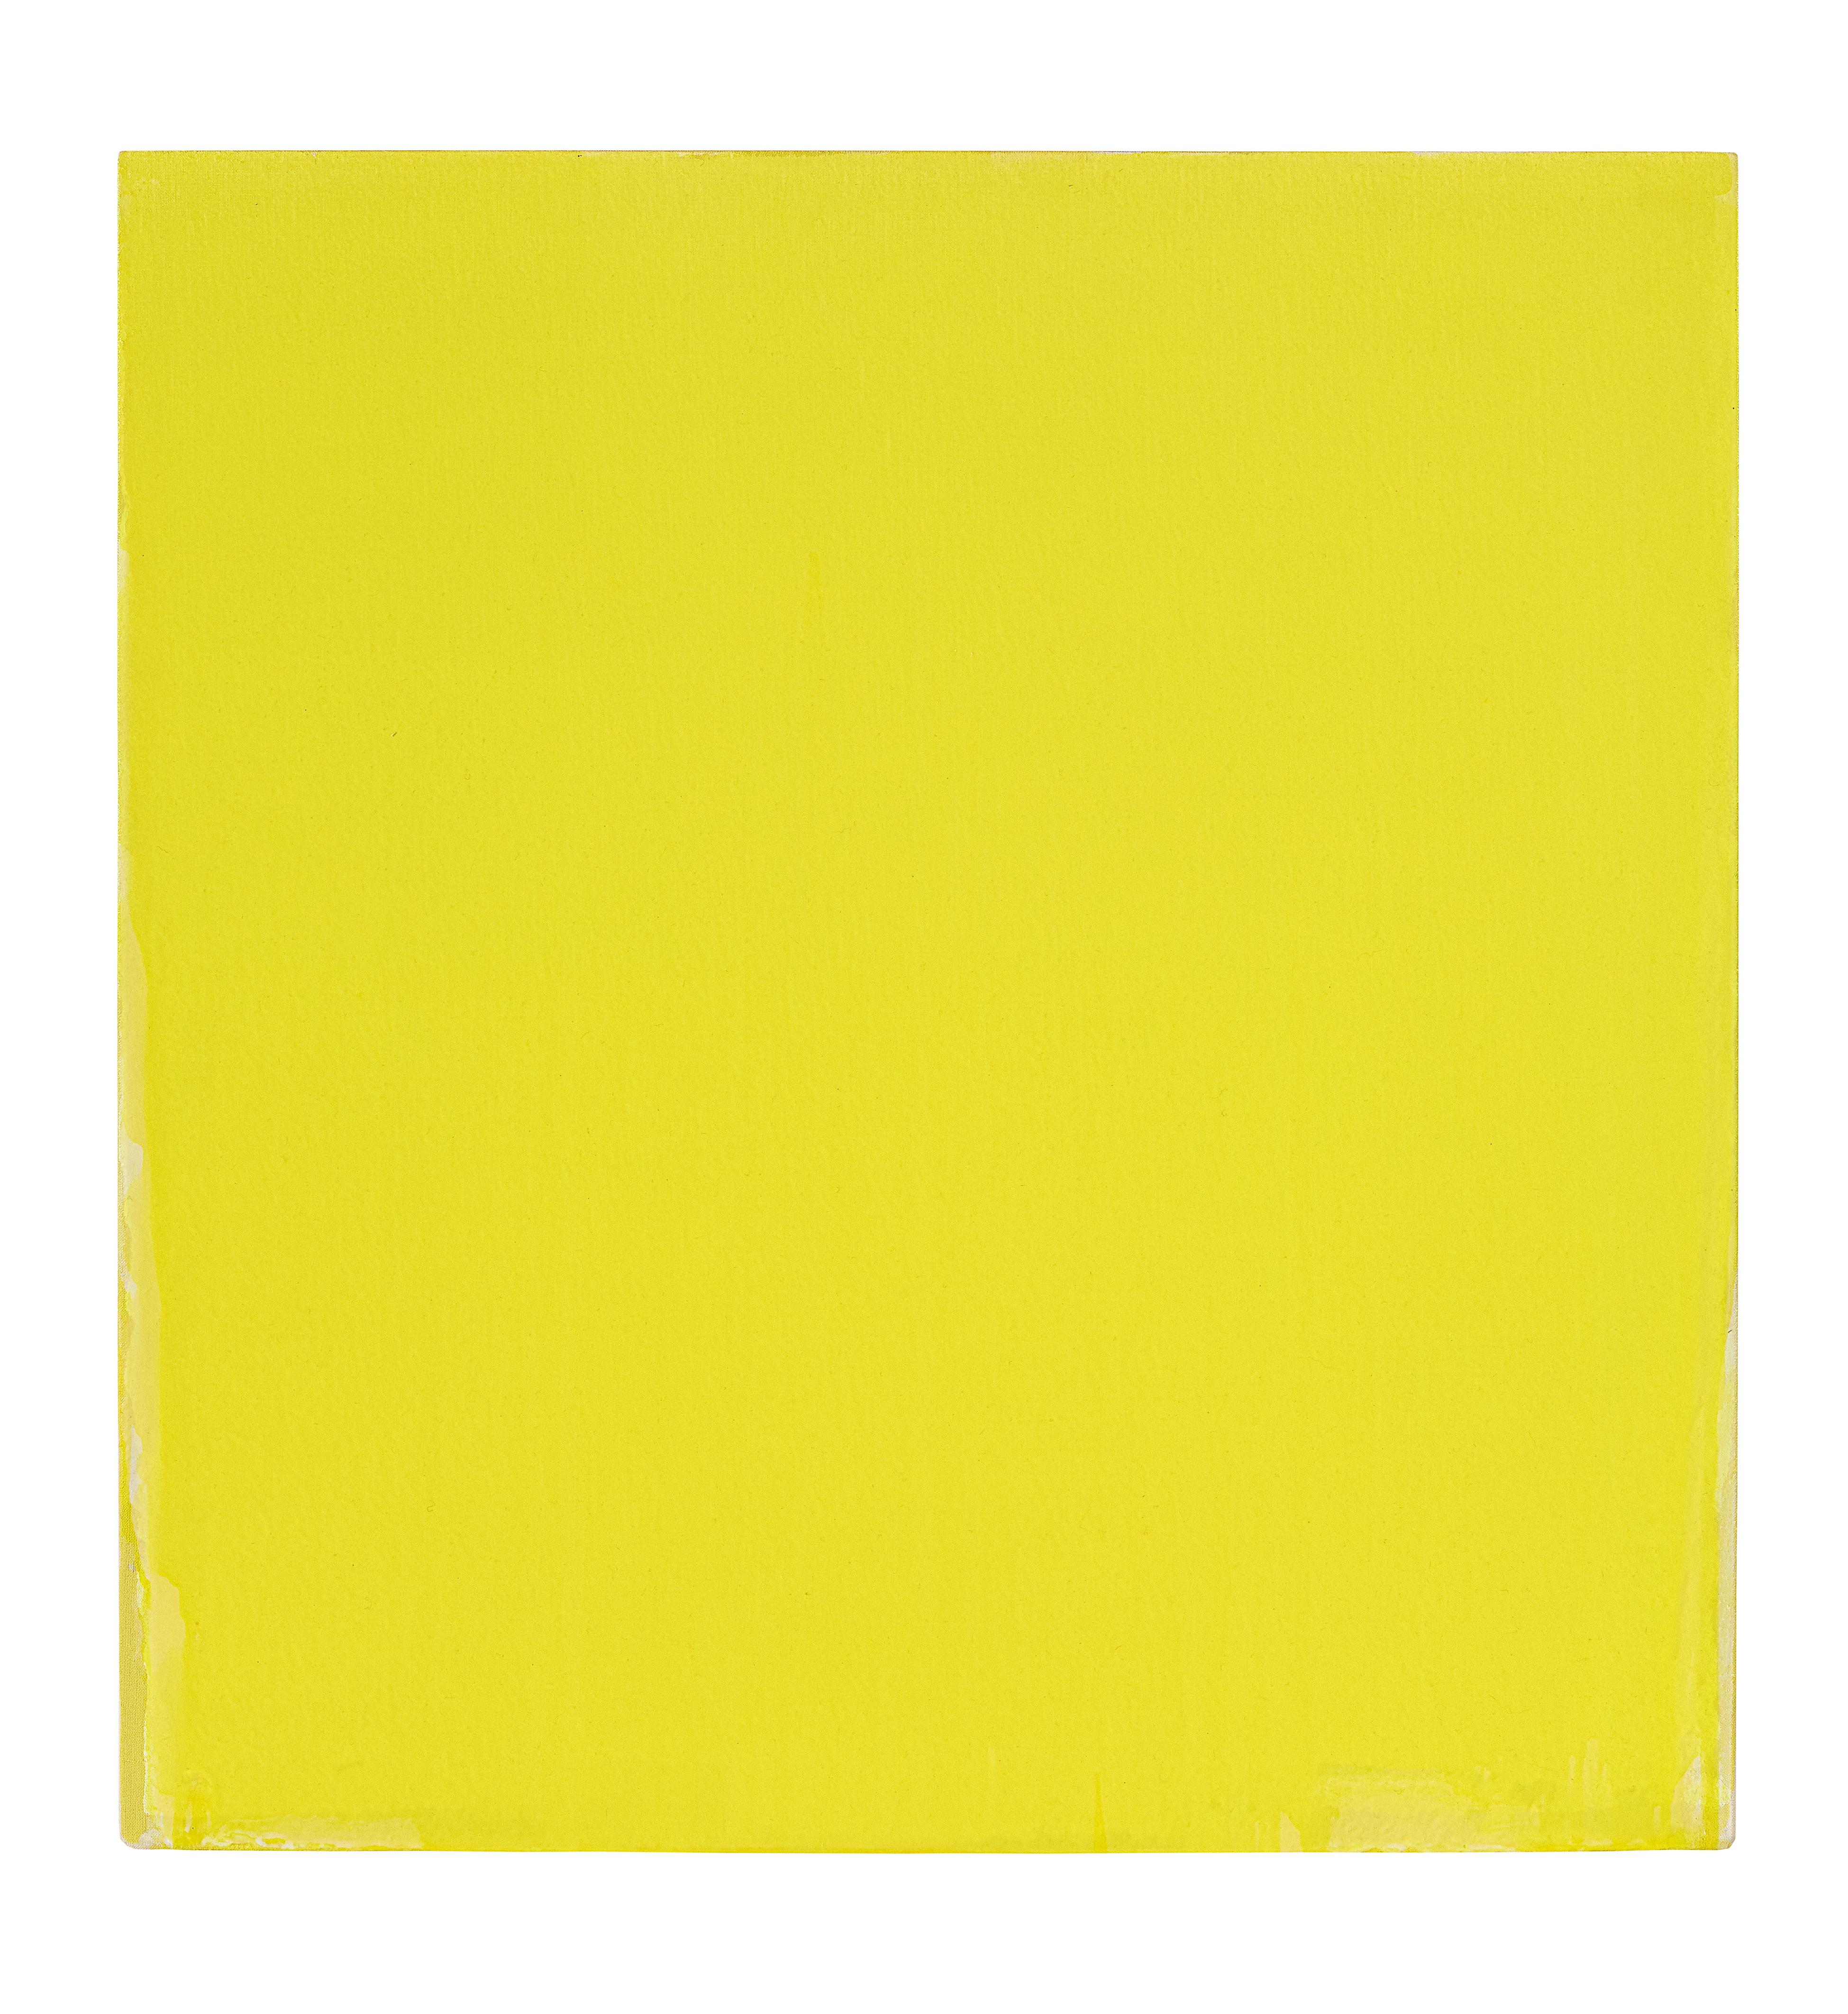 Joseph Marioni - Yellow - image-1